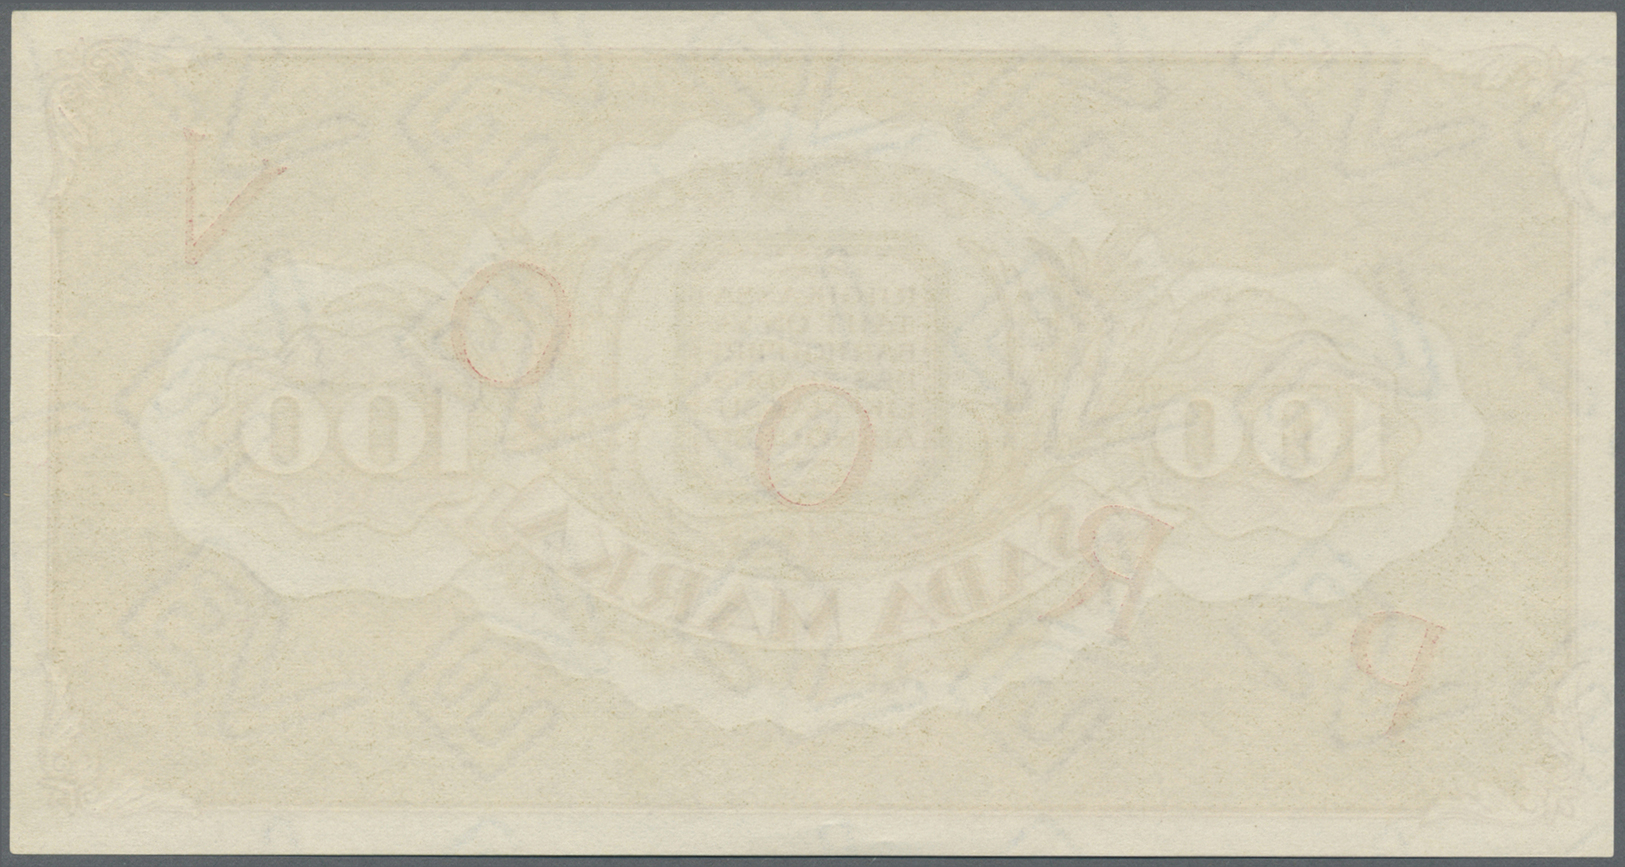 00724 Estonia / Estland: 100 Marka 1923 Specimen Proofs P. 23sp, Front And Back Seperatly Printed On Watermarked Banknot - Estonia